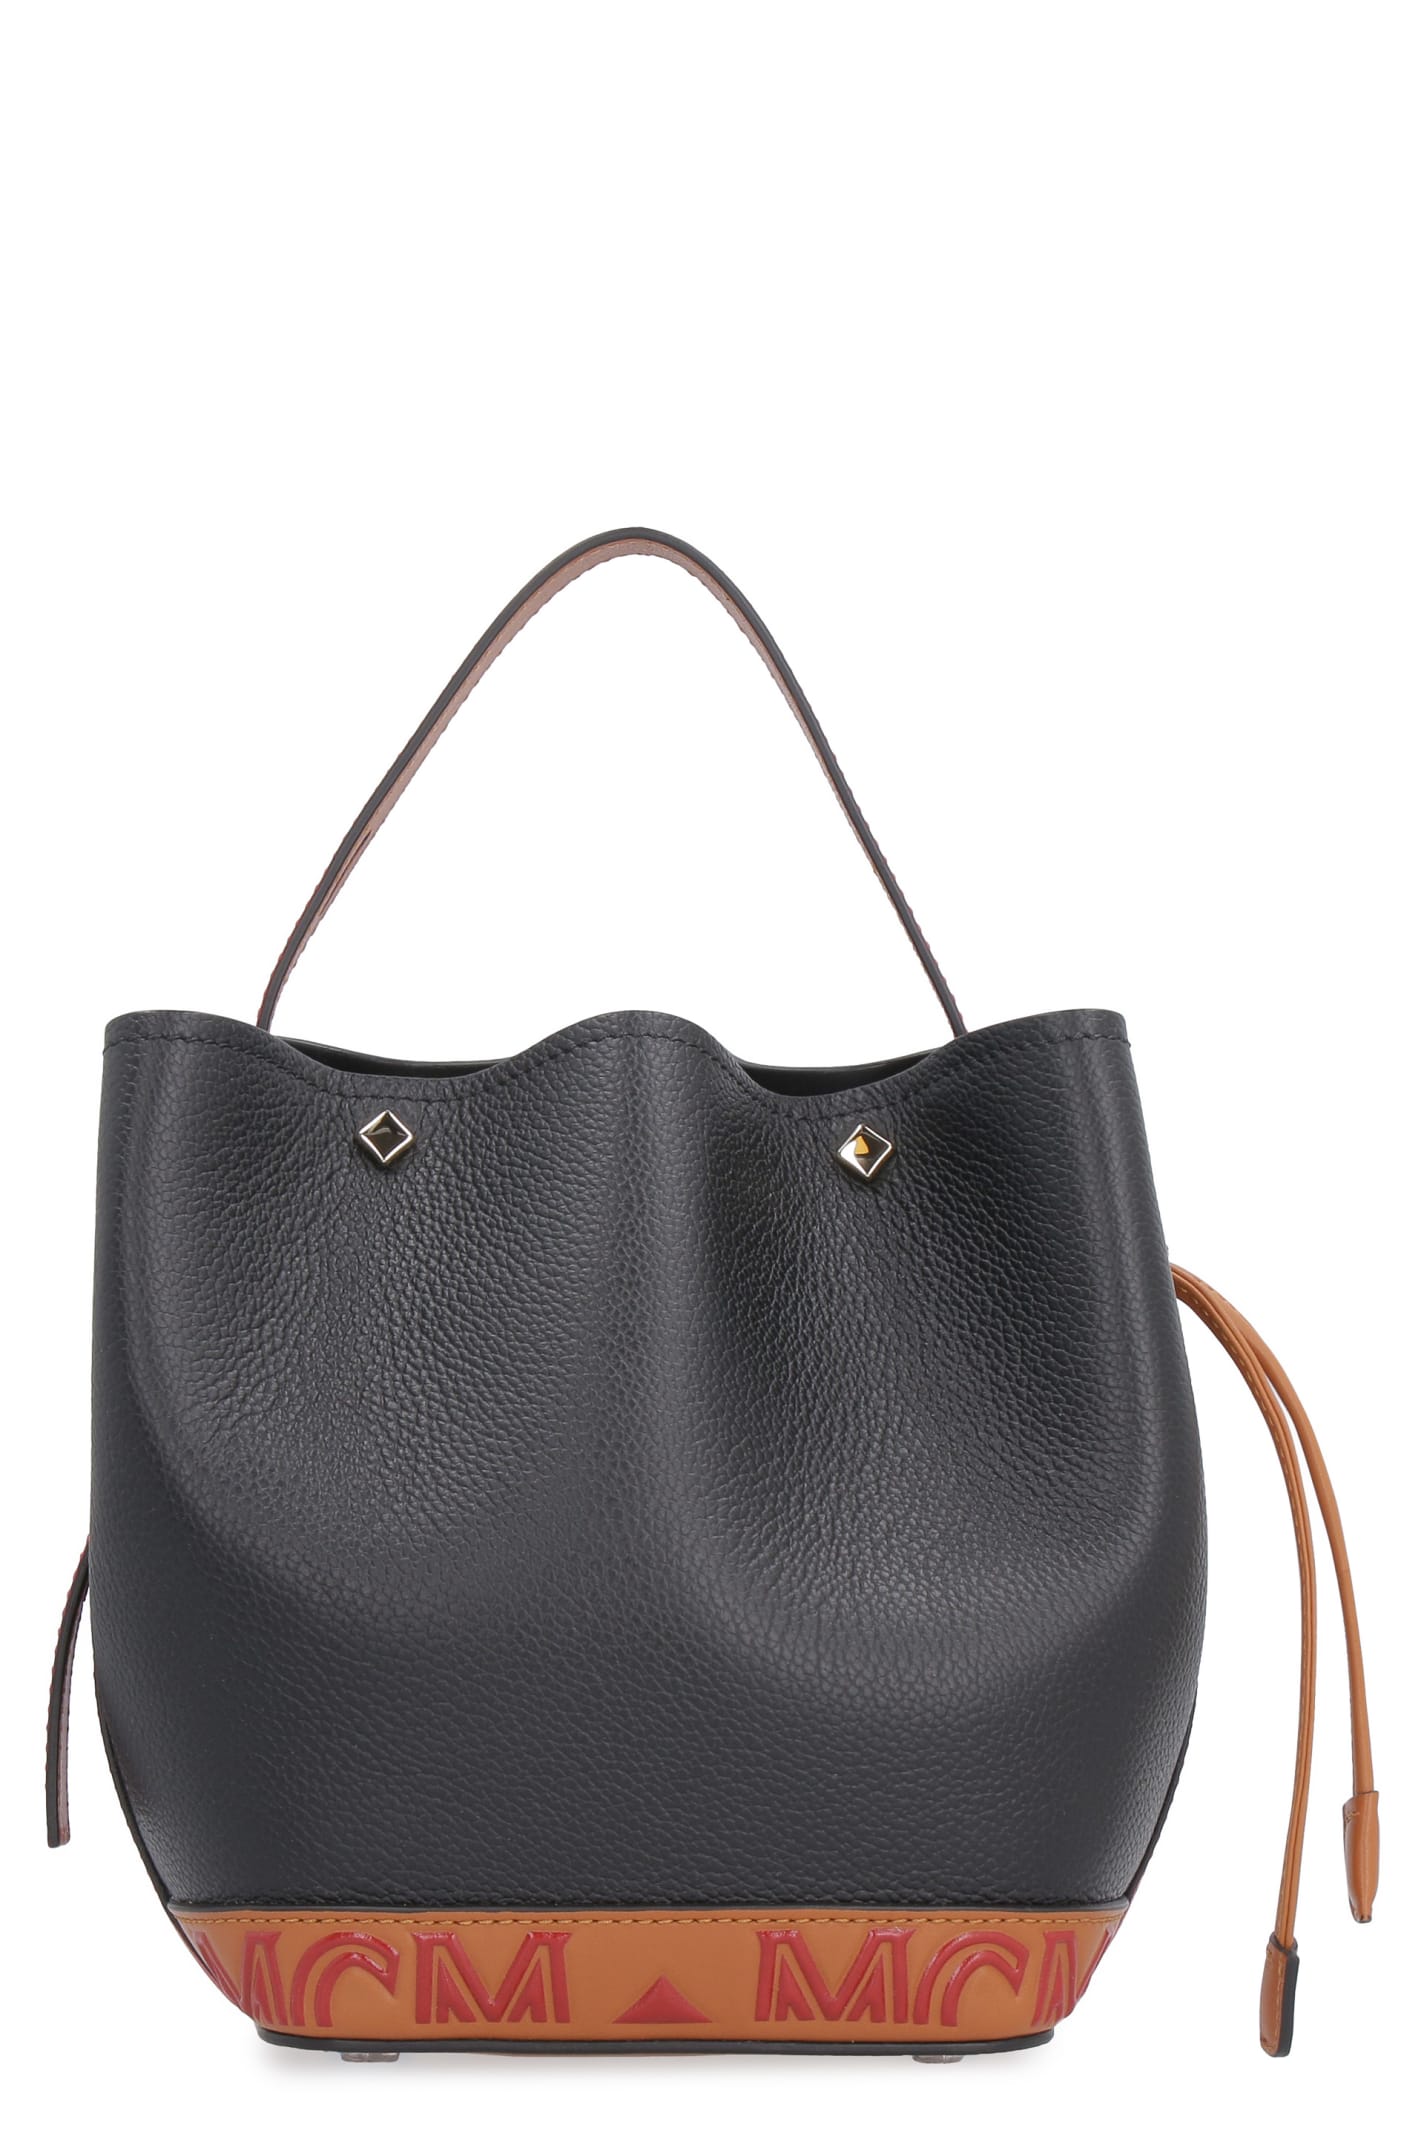 MCM Milano Leather Handbag